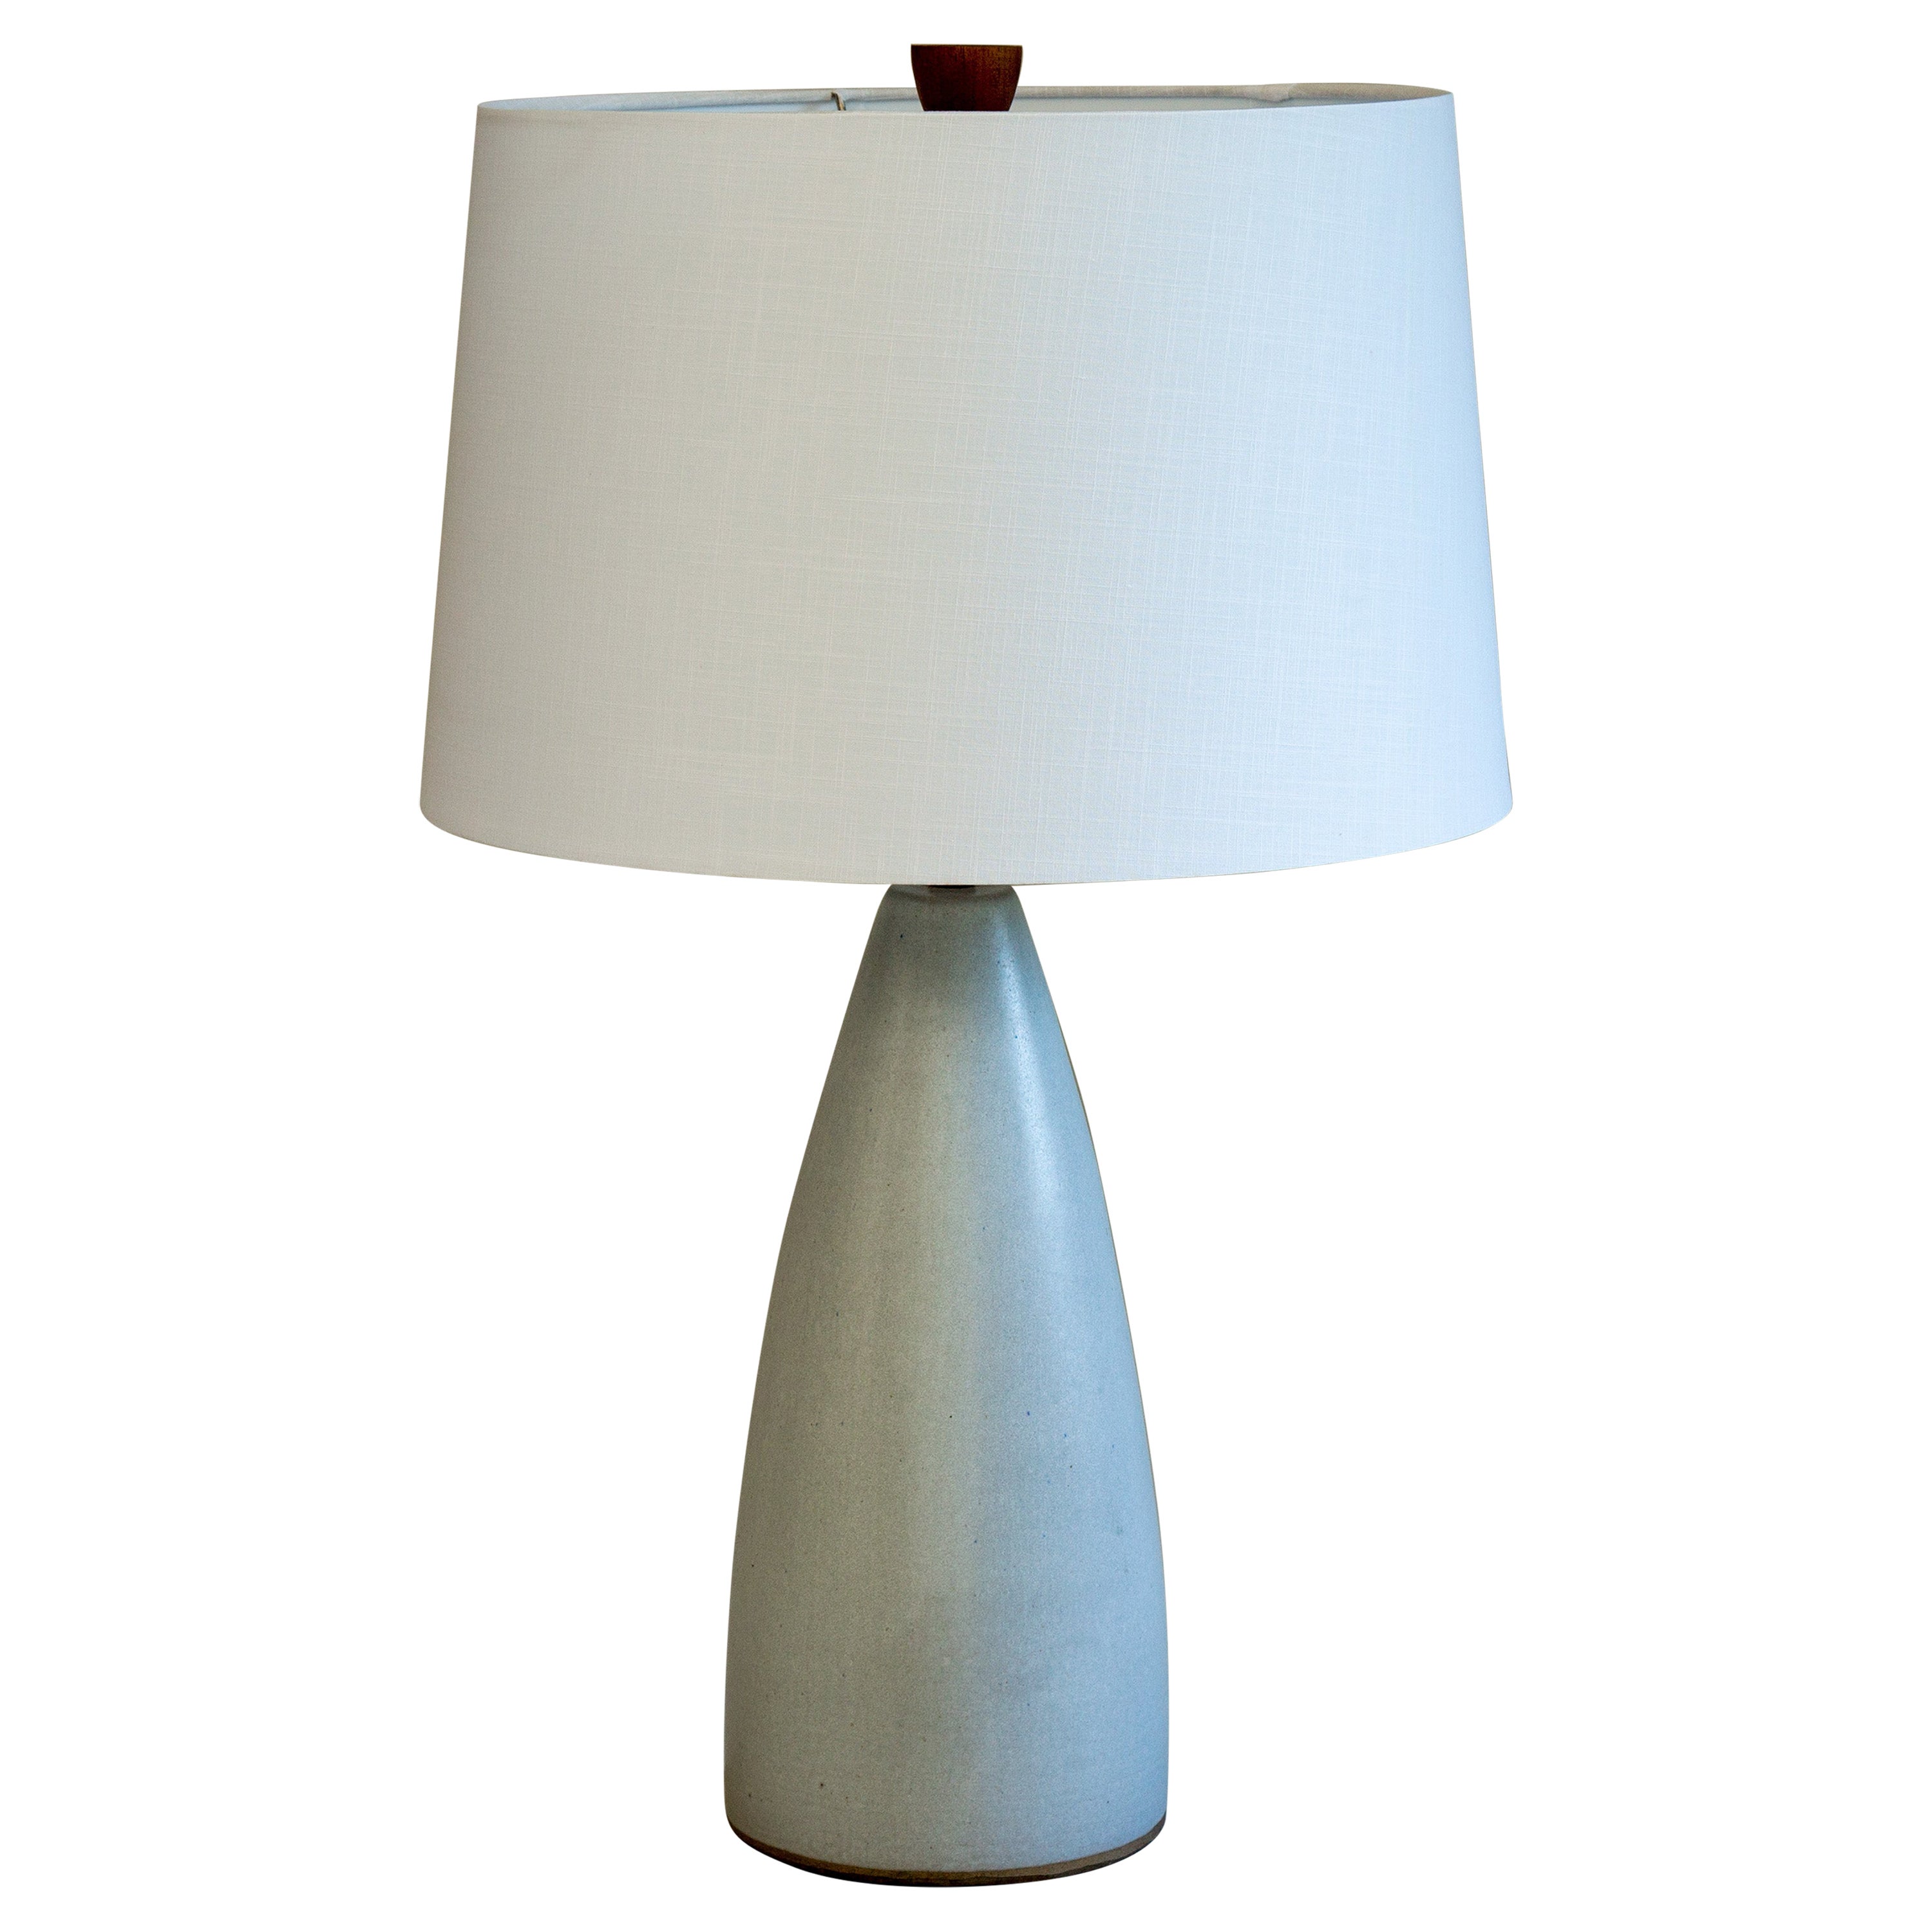 Gordon and Jane Martz M 53 Lamp for Marshall Studios Light Gray Blue white Cone For Sale